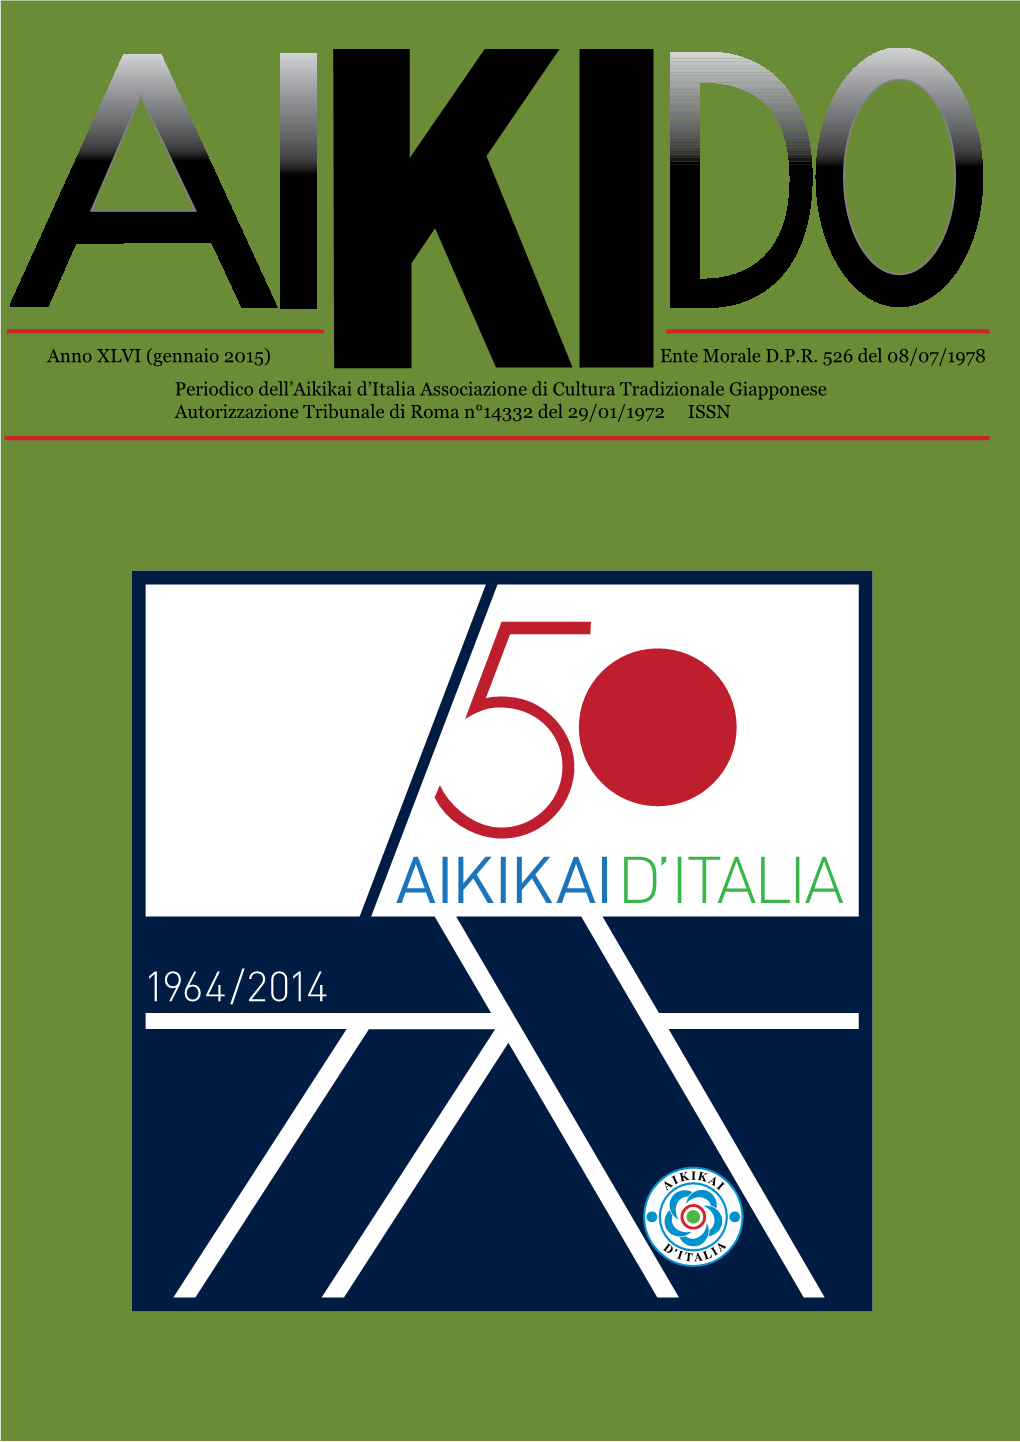 2015 Aikido XLVI